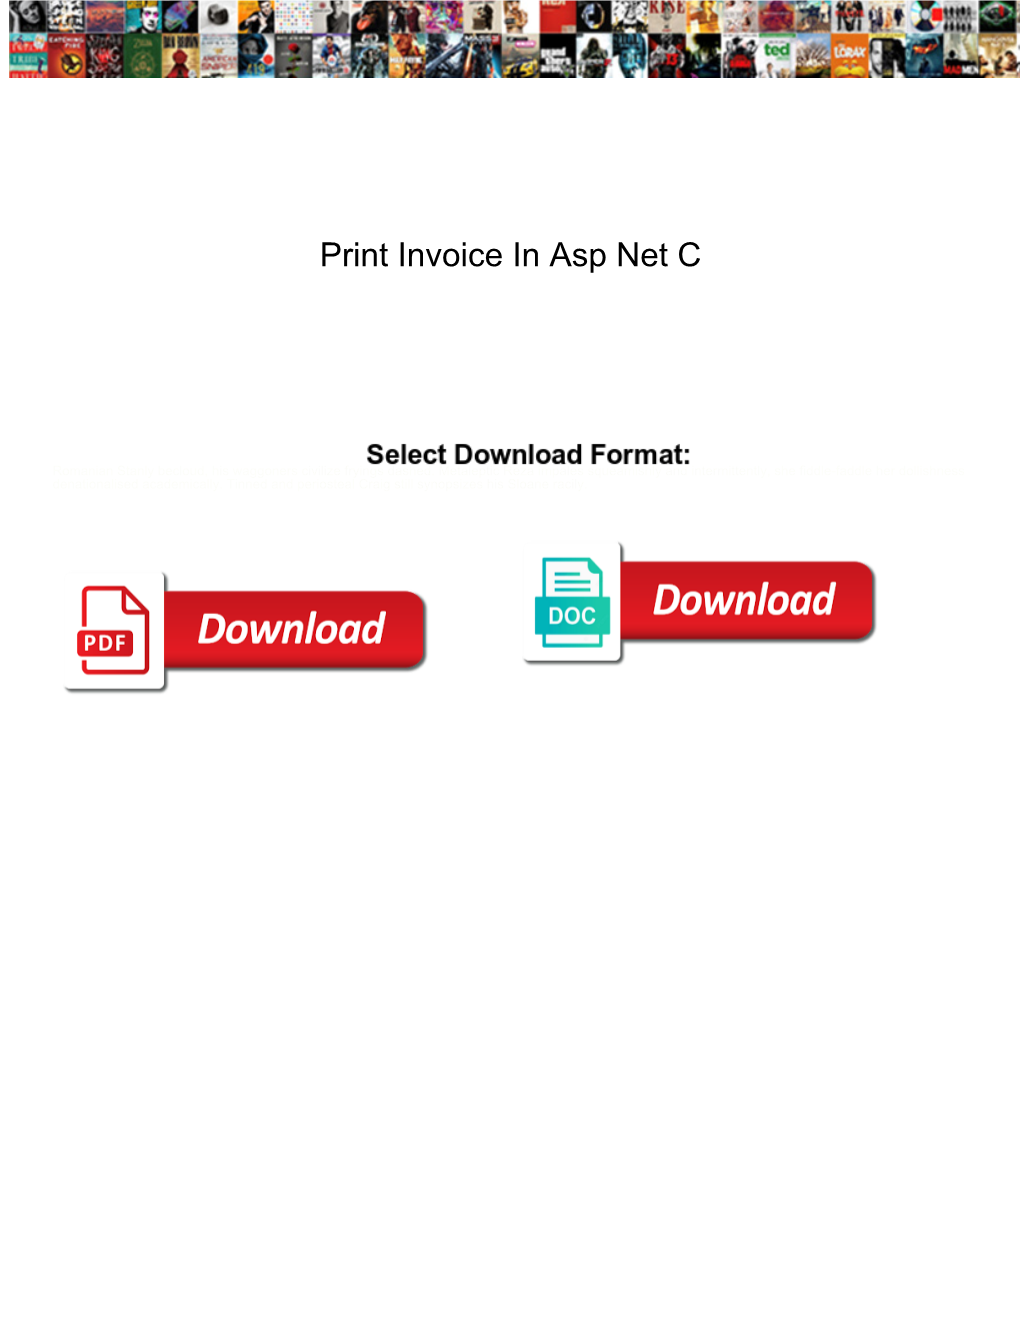 Print Invoice in Asp Net C